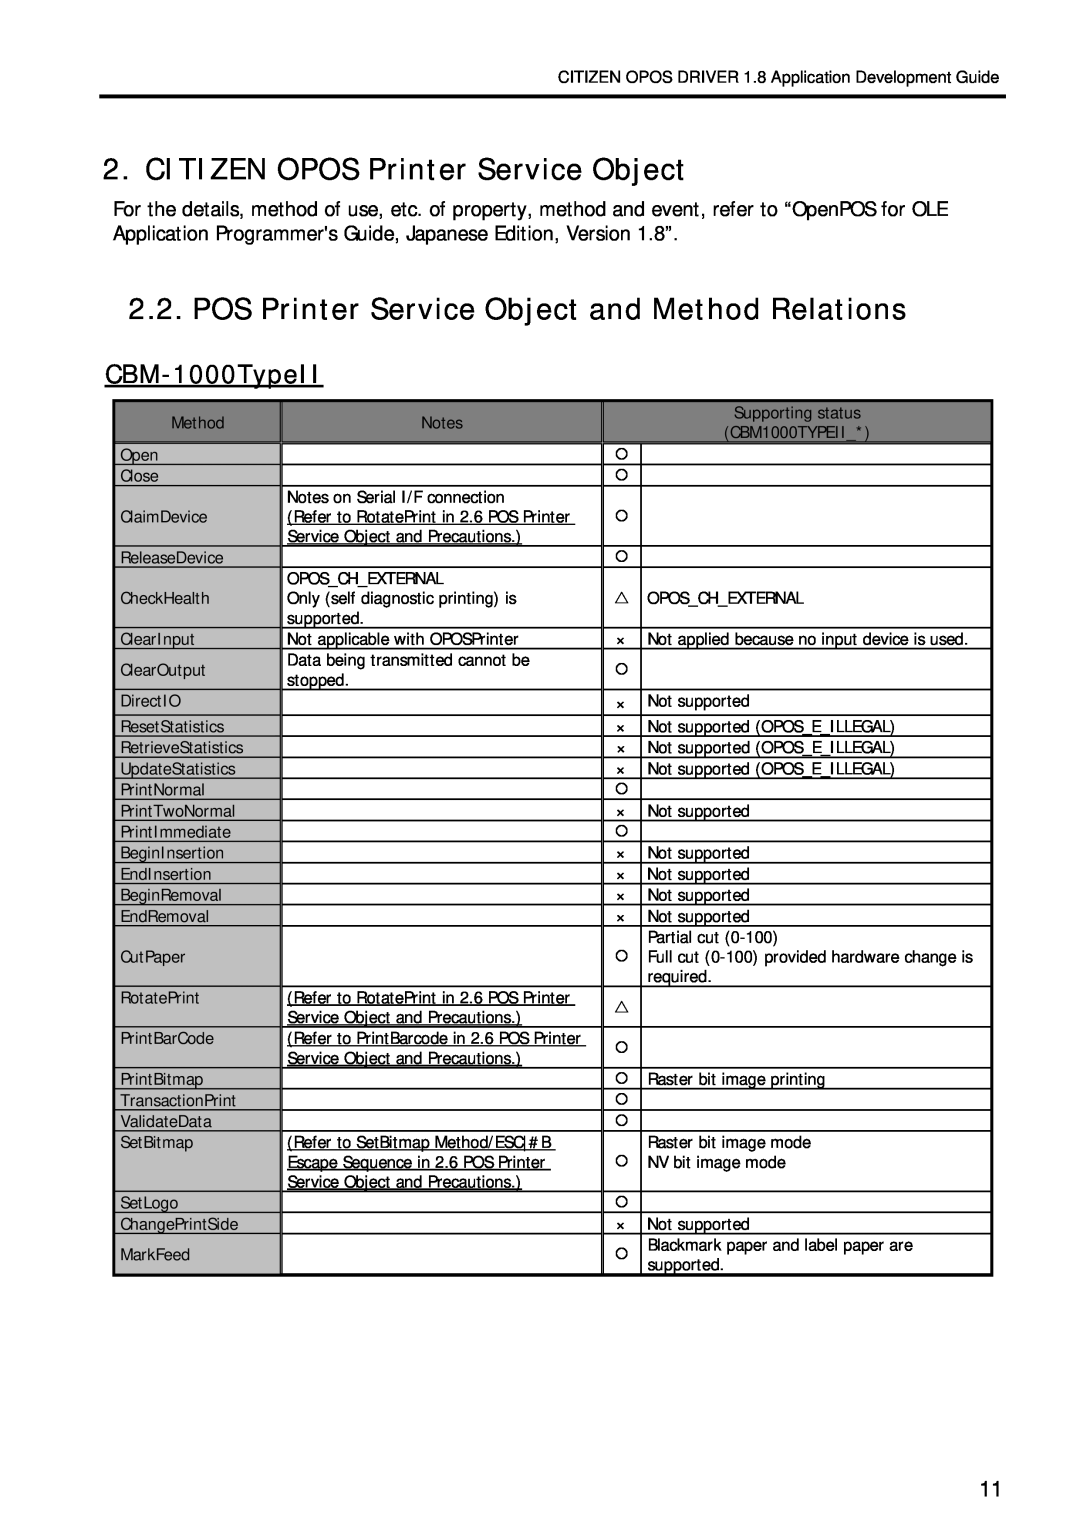 Citizen Systems 1.8 CITIZEN OPOS Printer Service Object, POS Printer Service Object and Method Relations, CBM-1000TypeII 